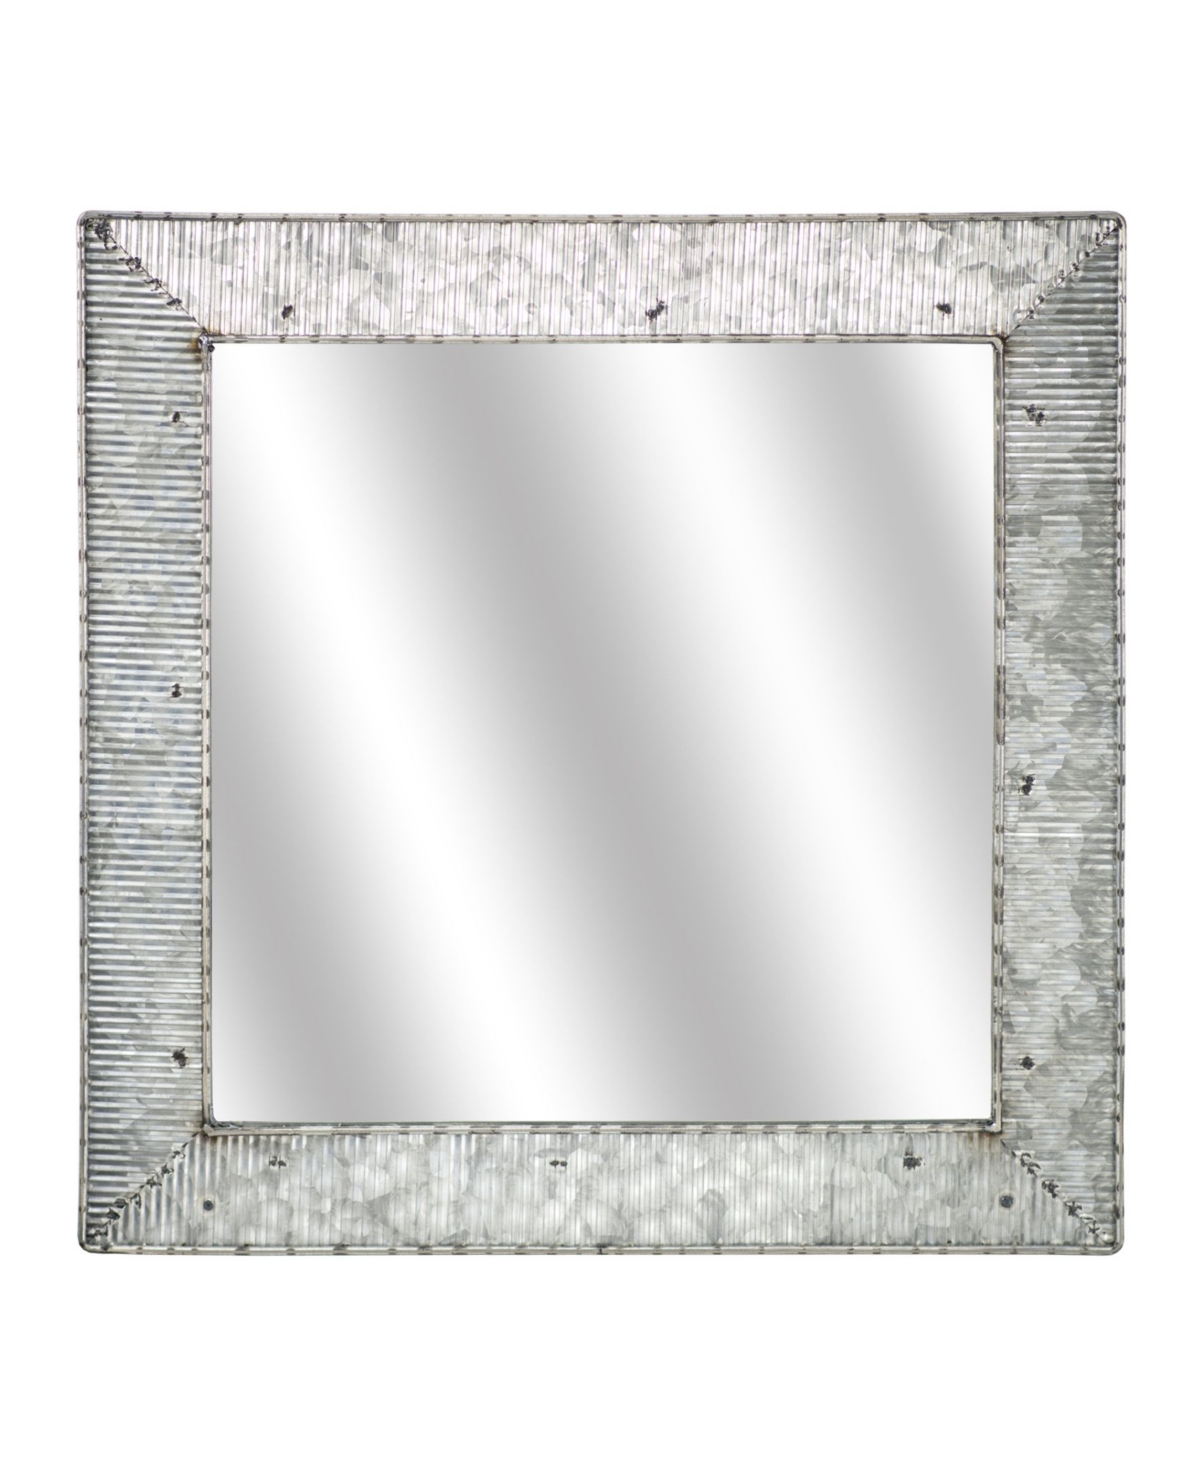 American Art Decor Galvanized Wall Vanity Mirror - Gray